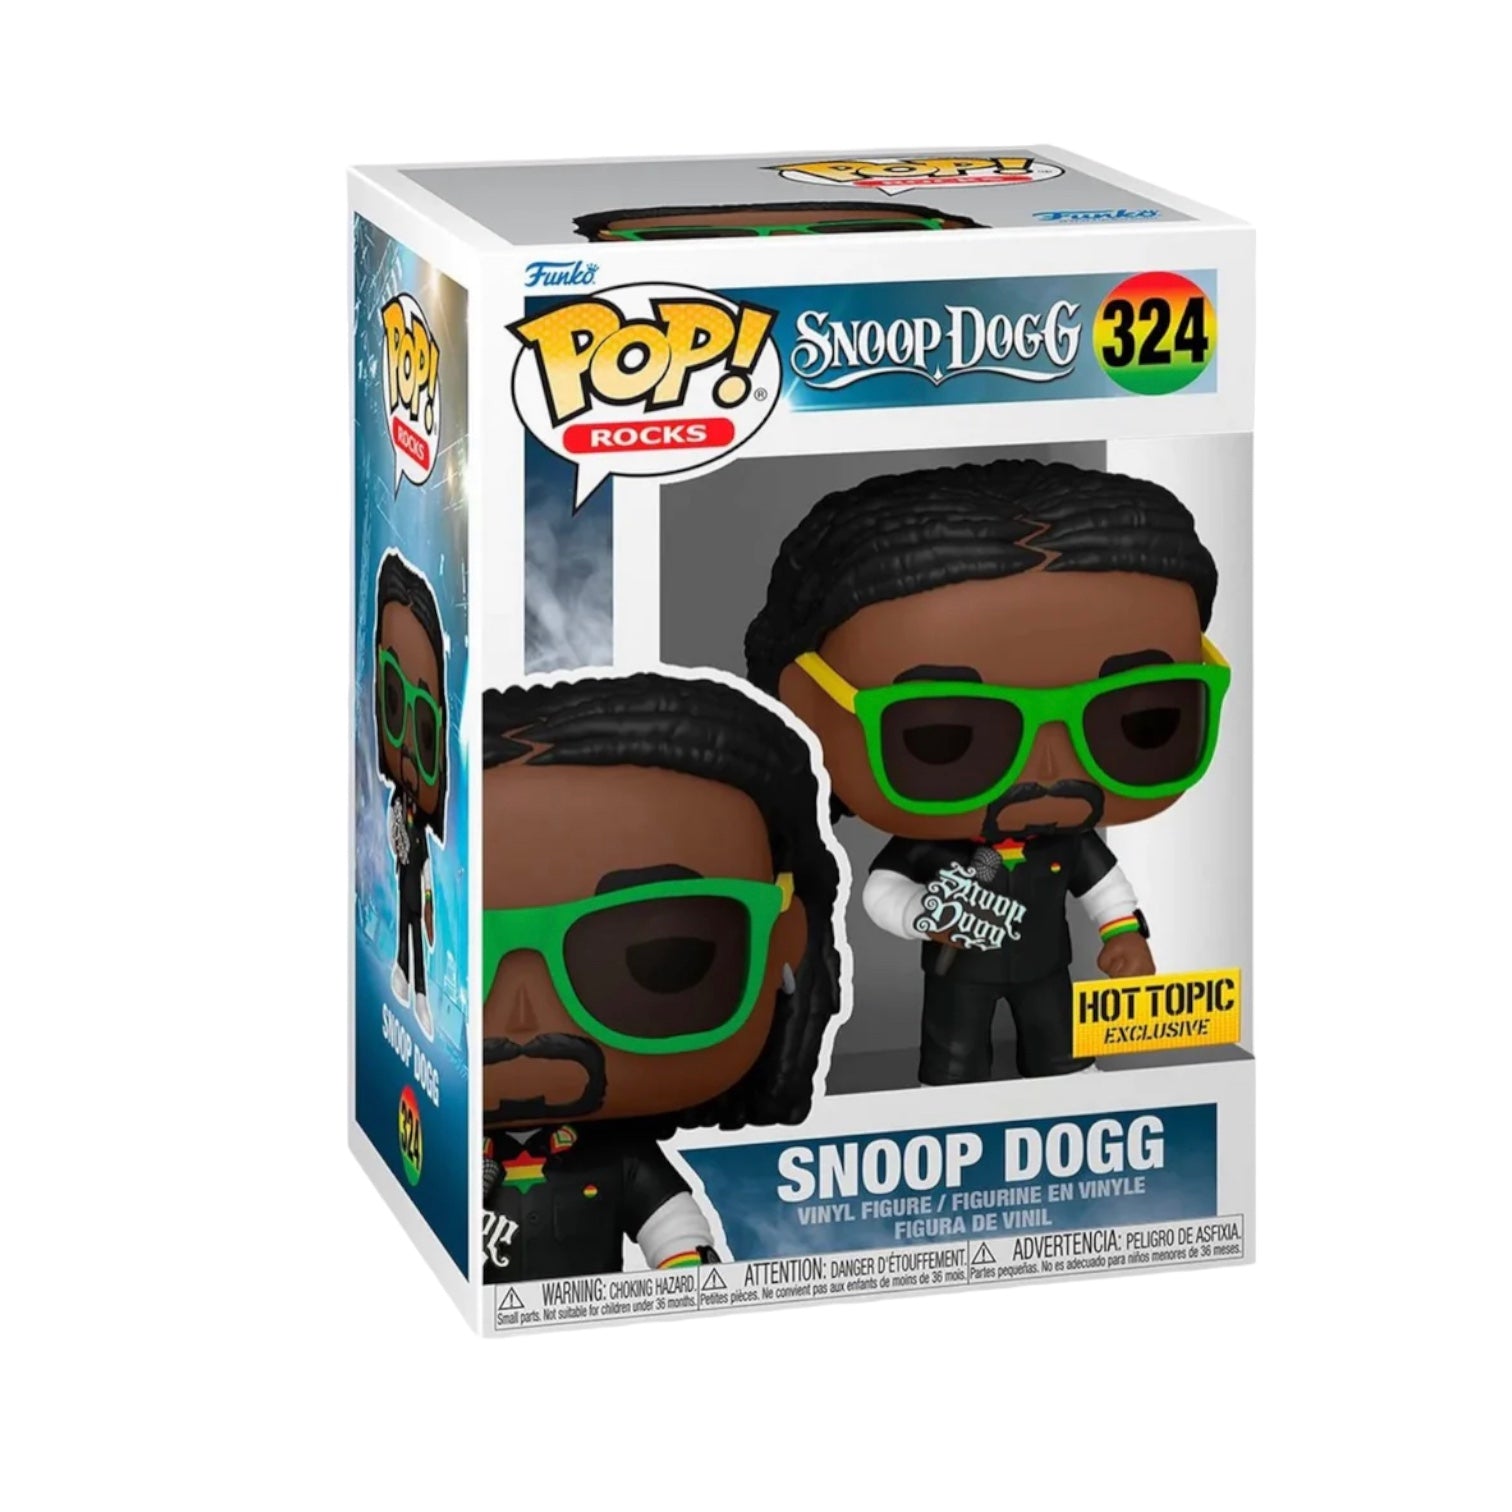 Snoop Dogg #324 (w/ Microphone) Funko Pop! - Snoop Dogg - Hot Topic Exclusive